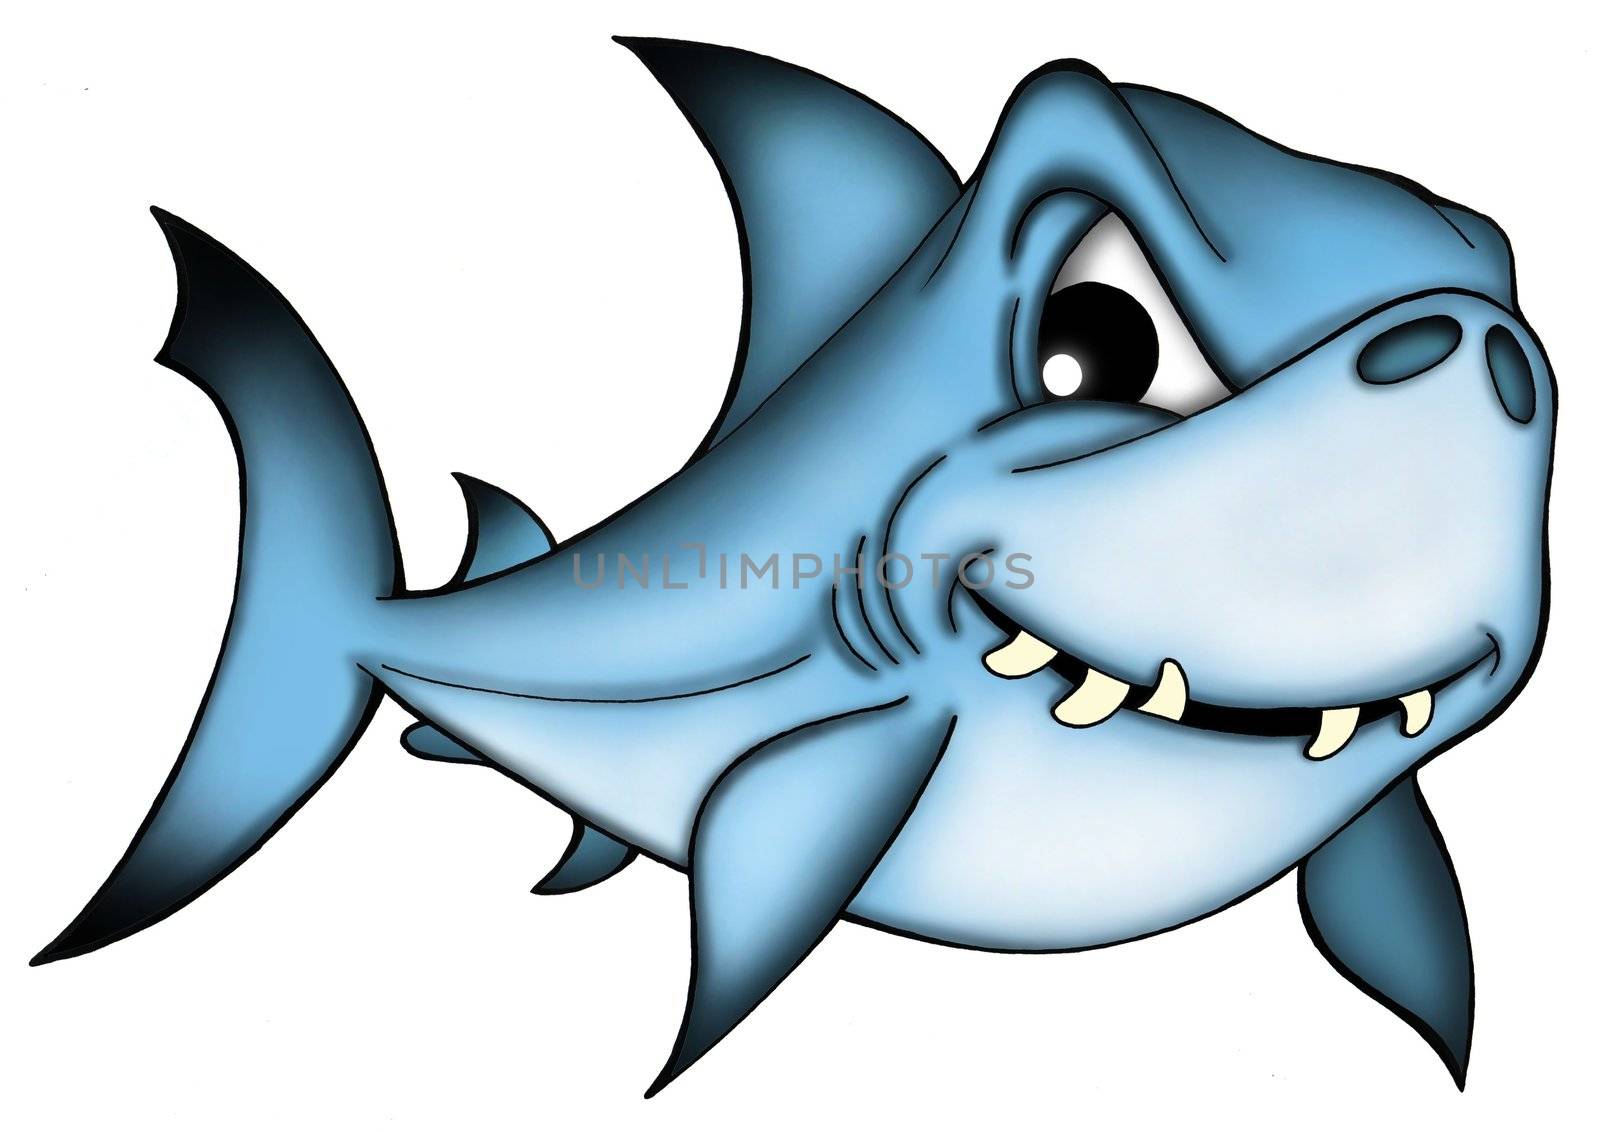 Shark on white background - color illustration